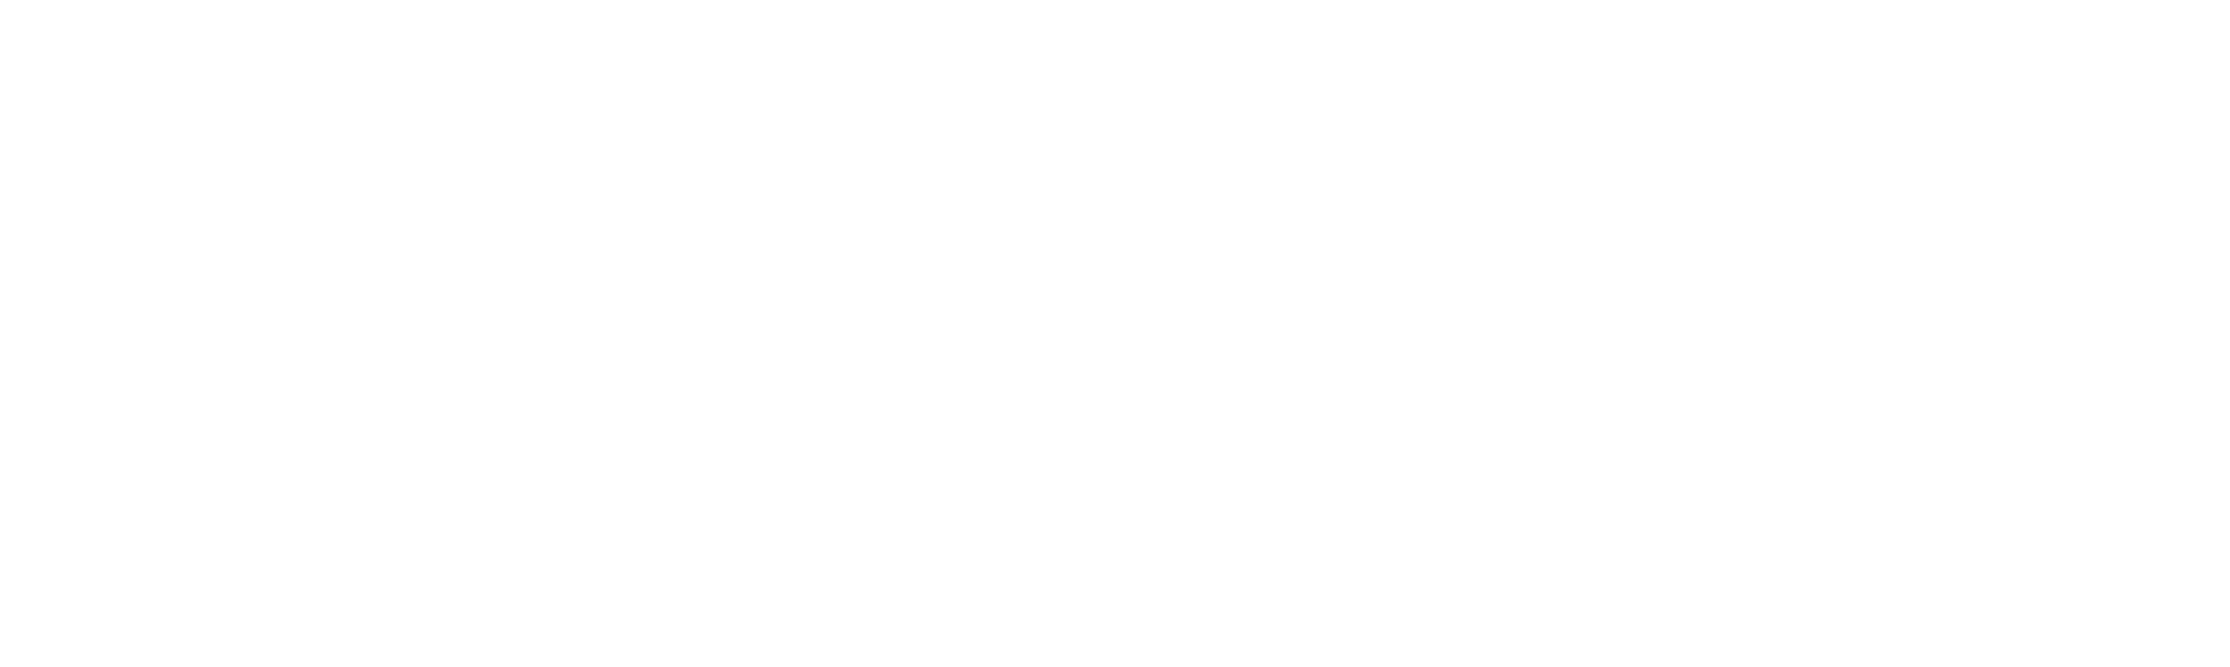 The Juno Media logo